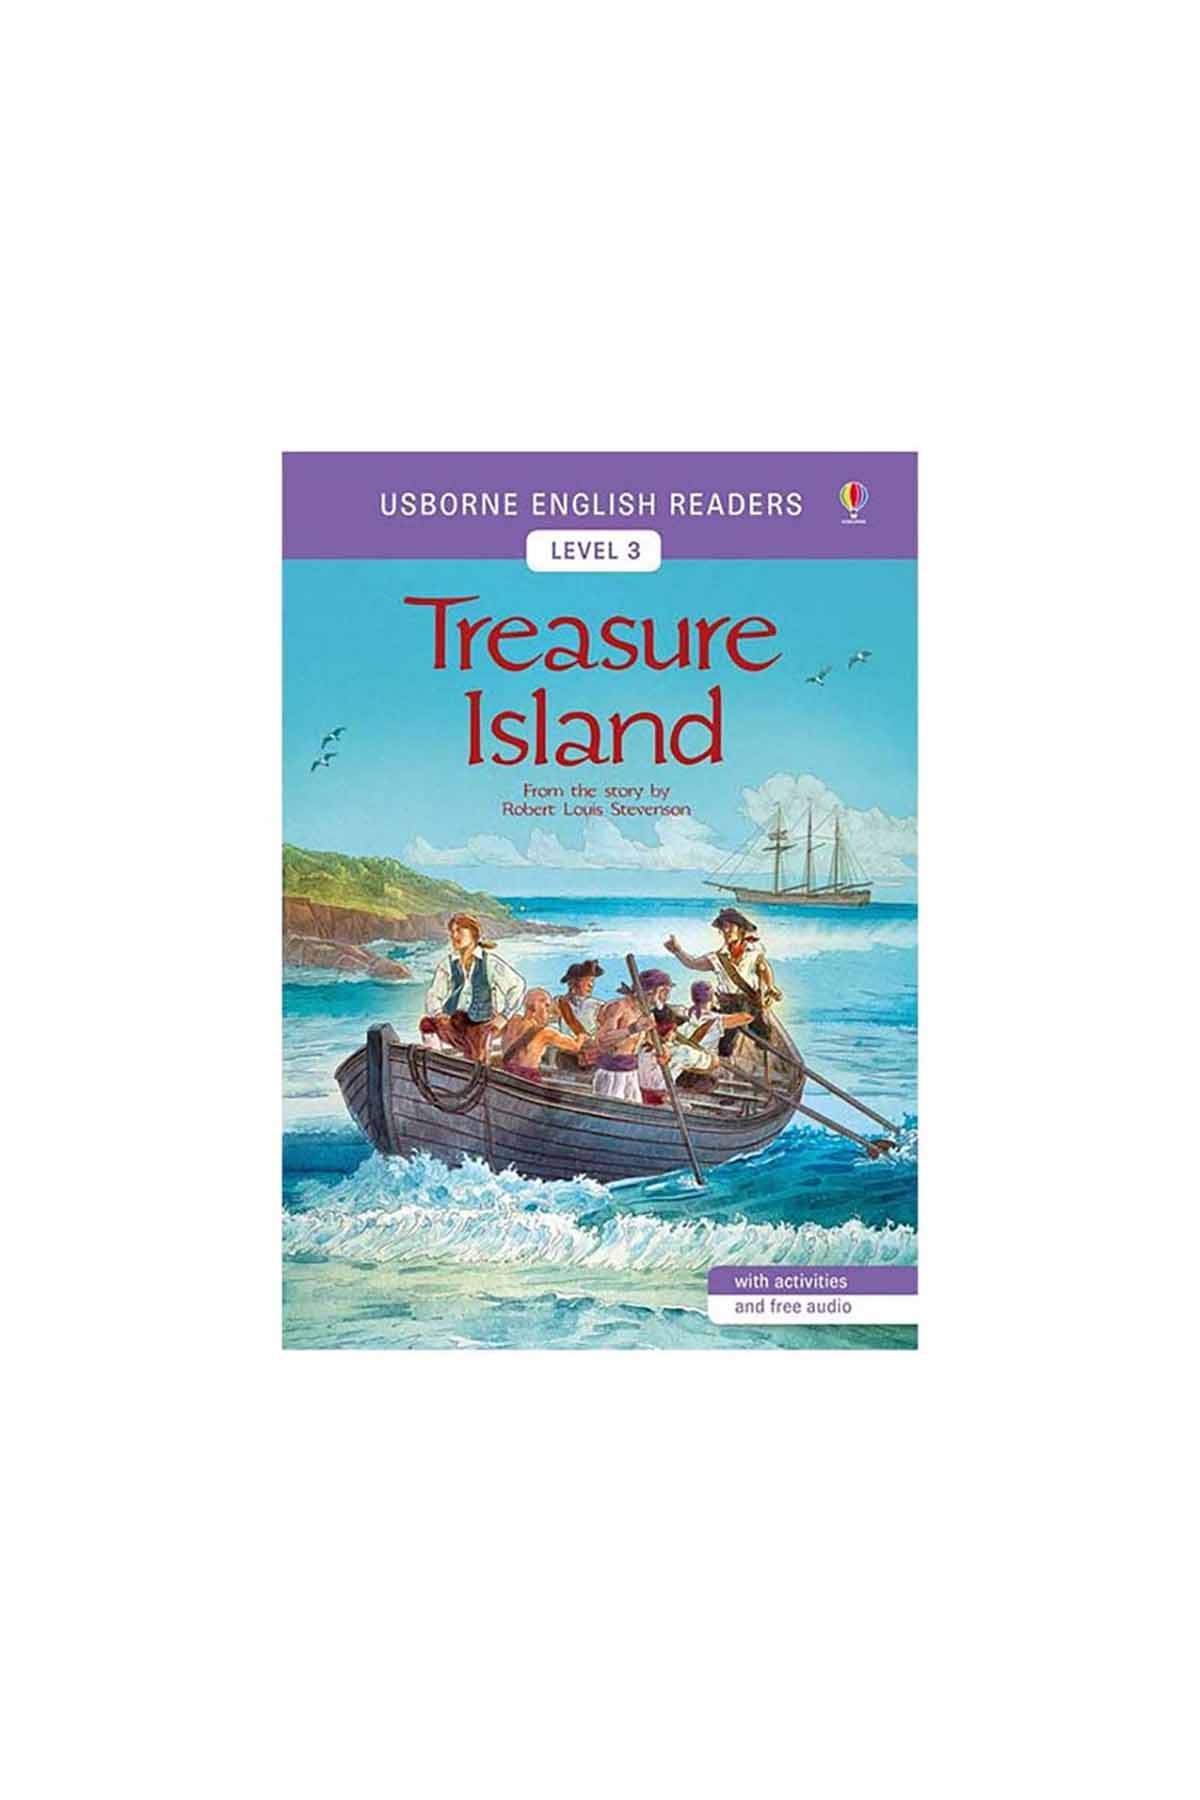 The Usborne Treasure Island